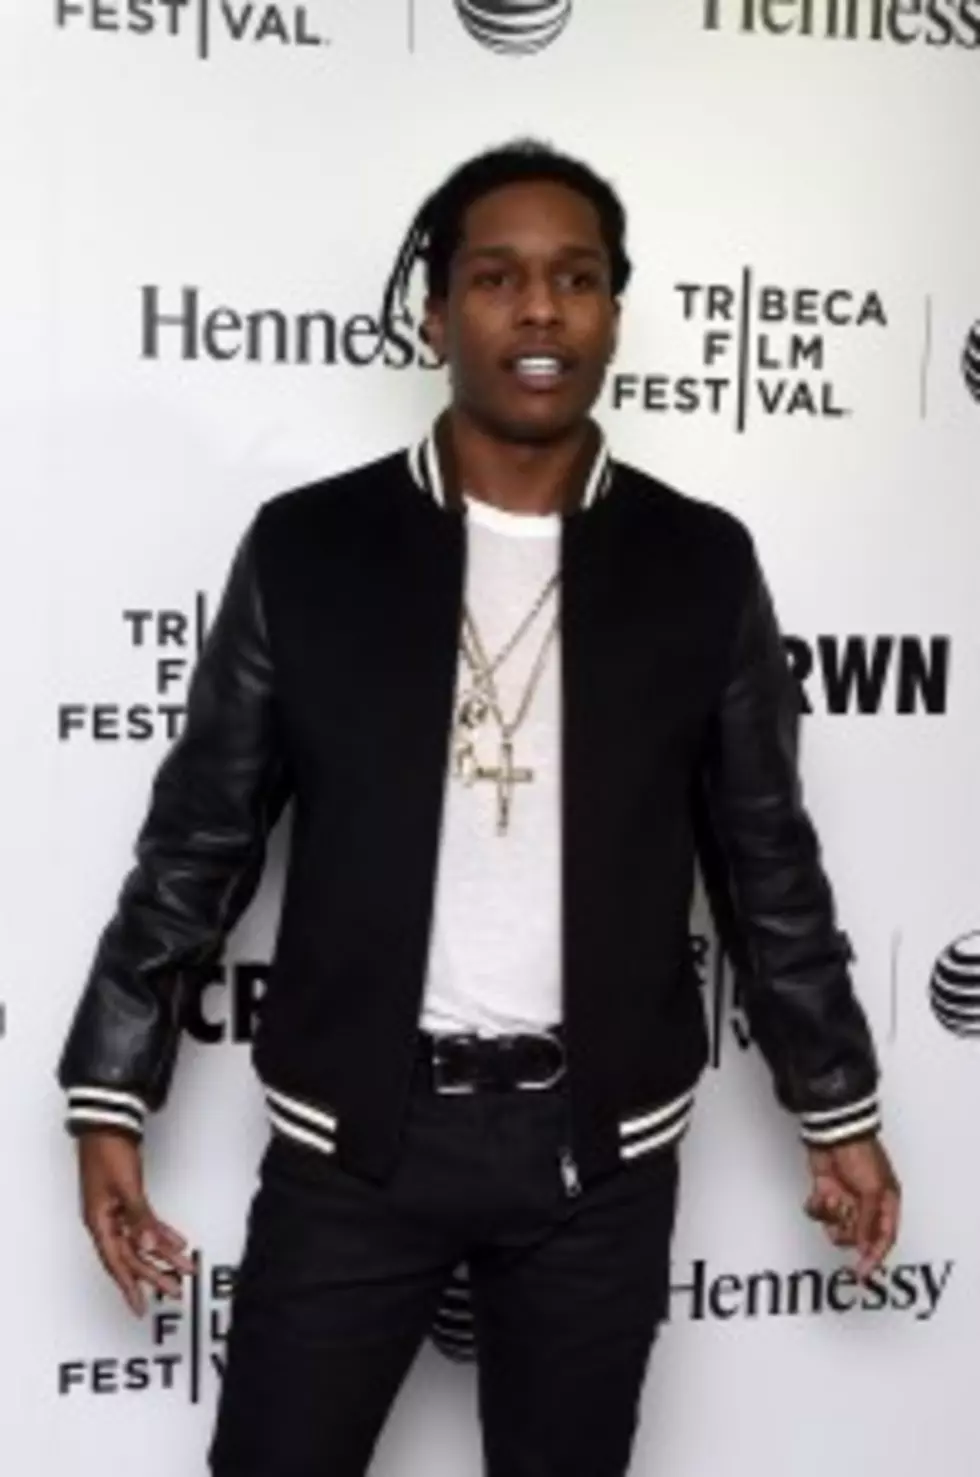 #TRENDING: PacSun Removes Controversial A$AP Rocky Shirt